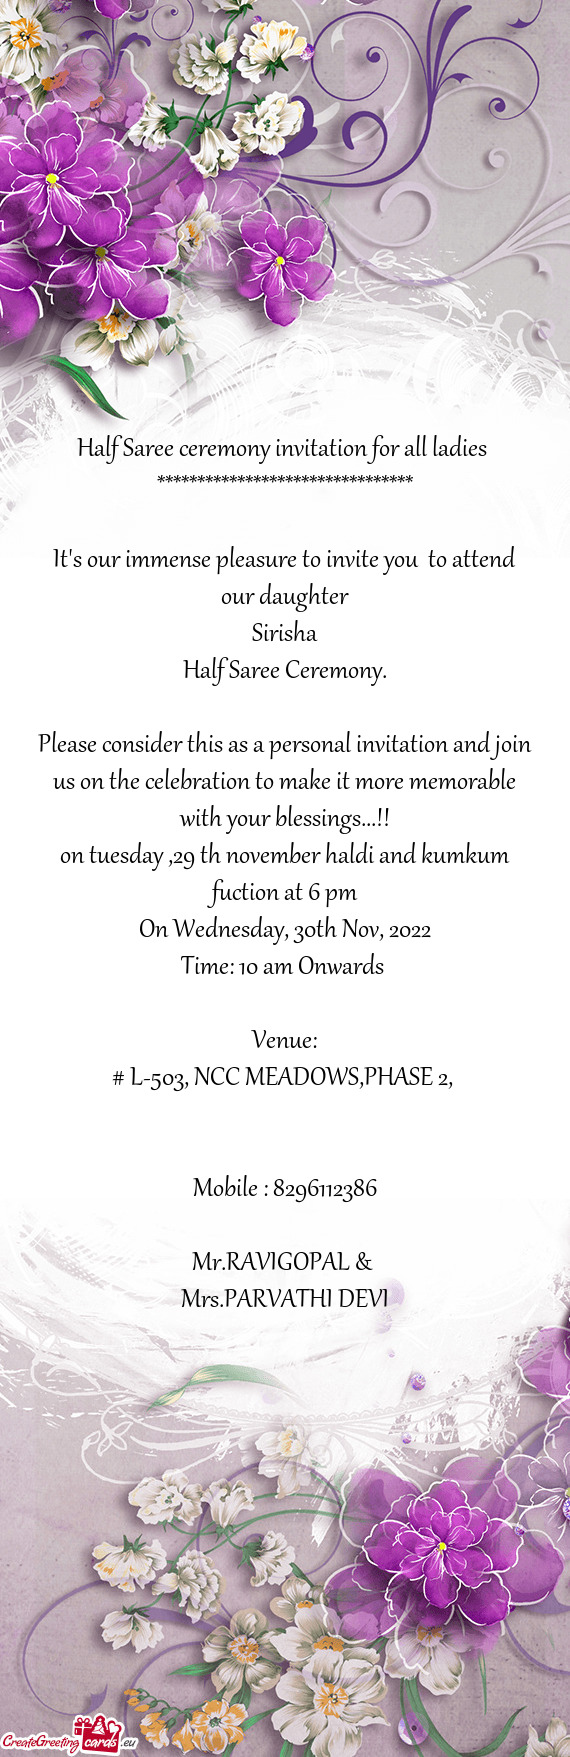 Half Saree ceremony invitation for all ladies